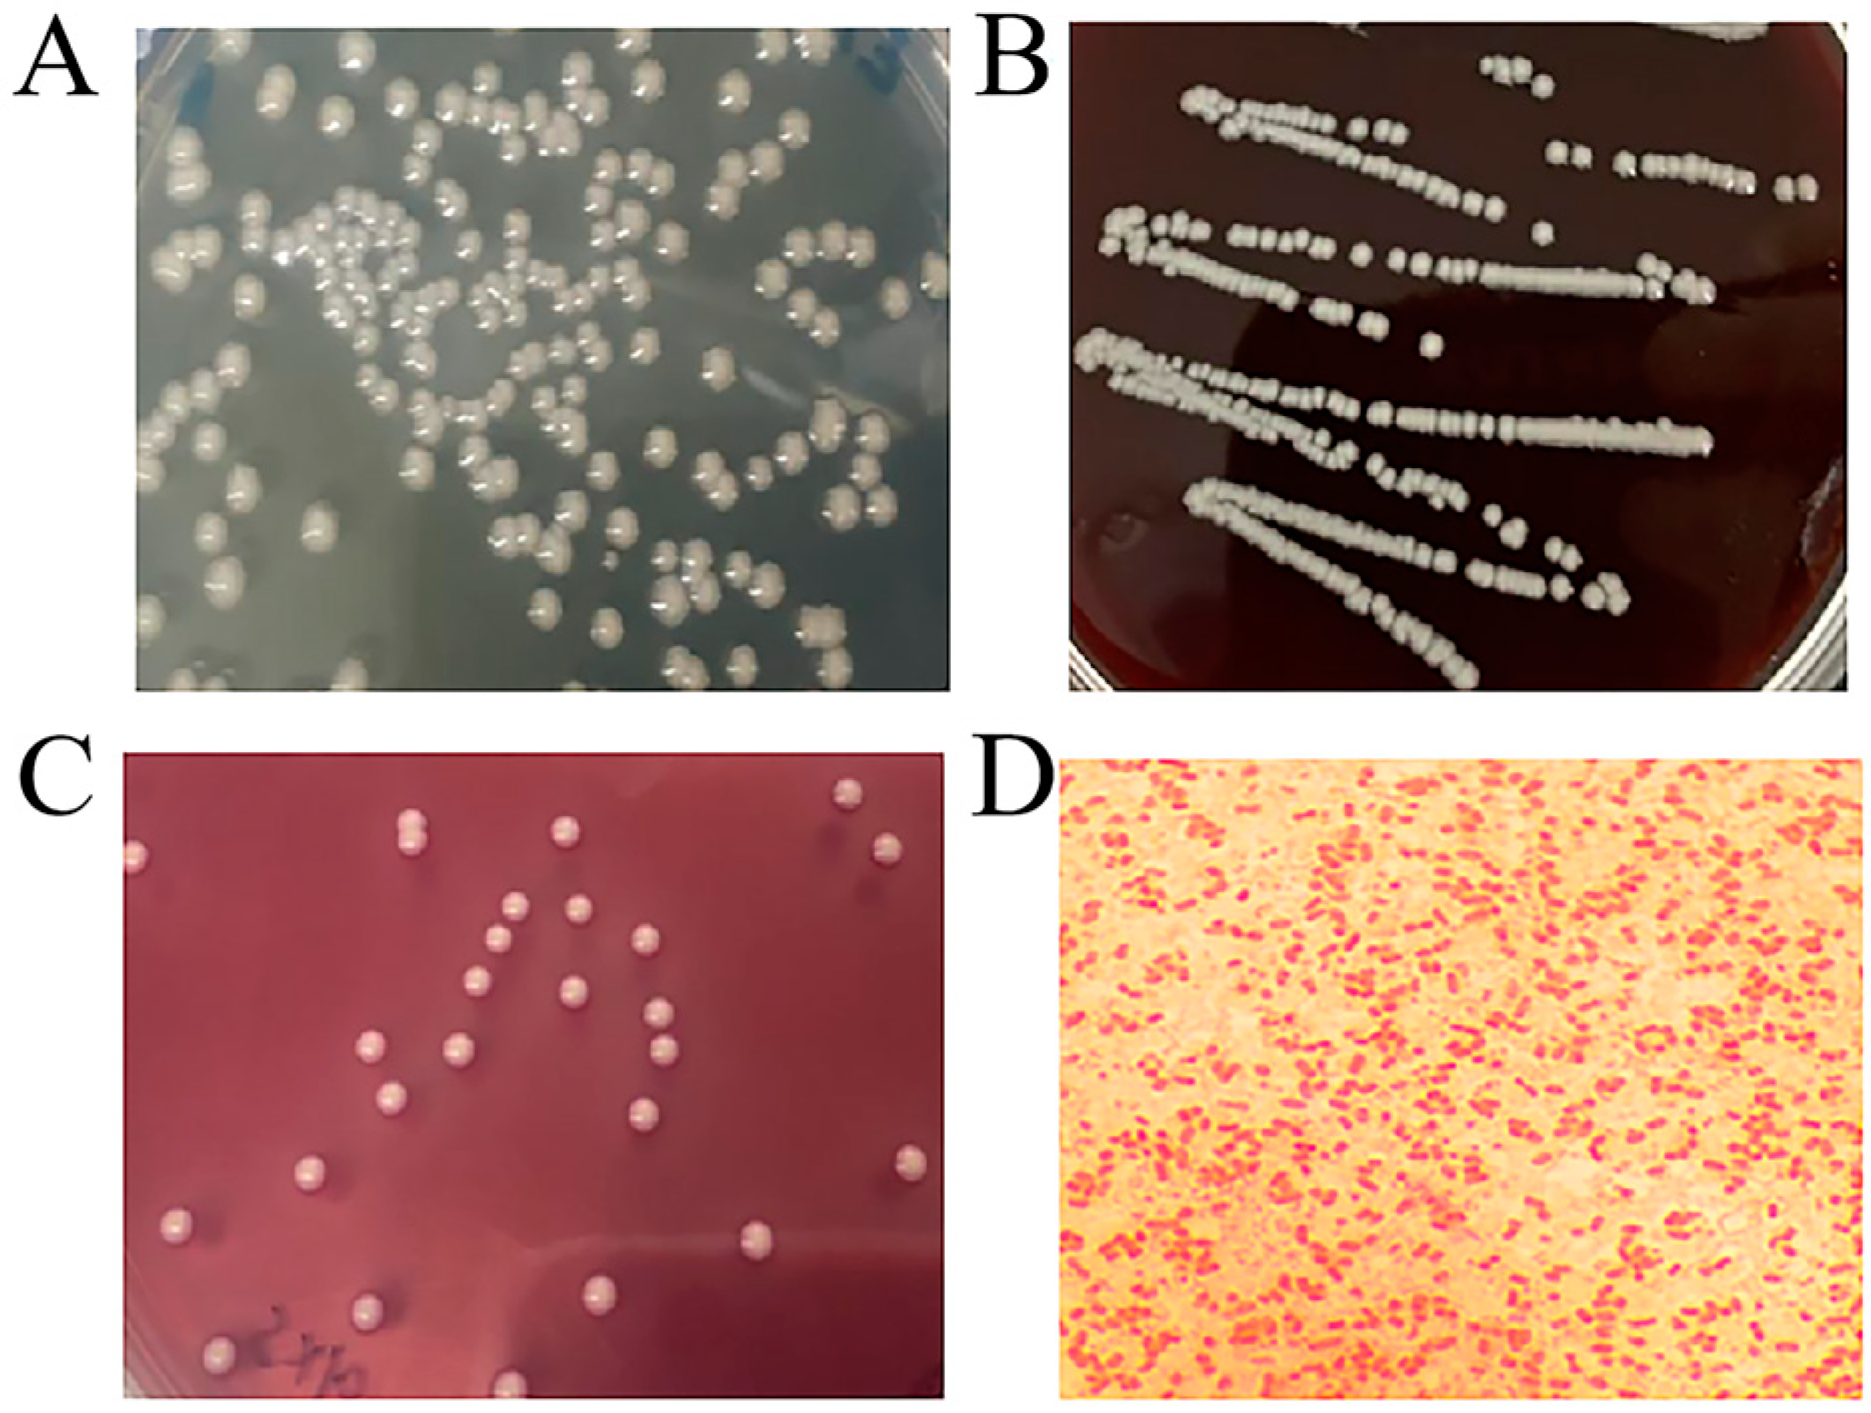 klebsiella pneumoniae gram stain morphology